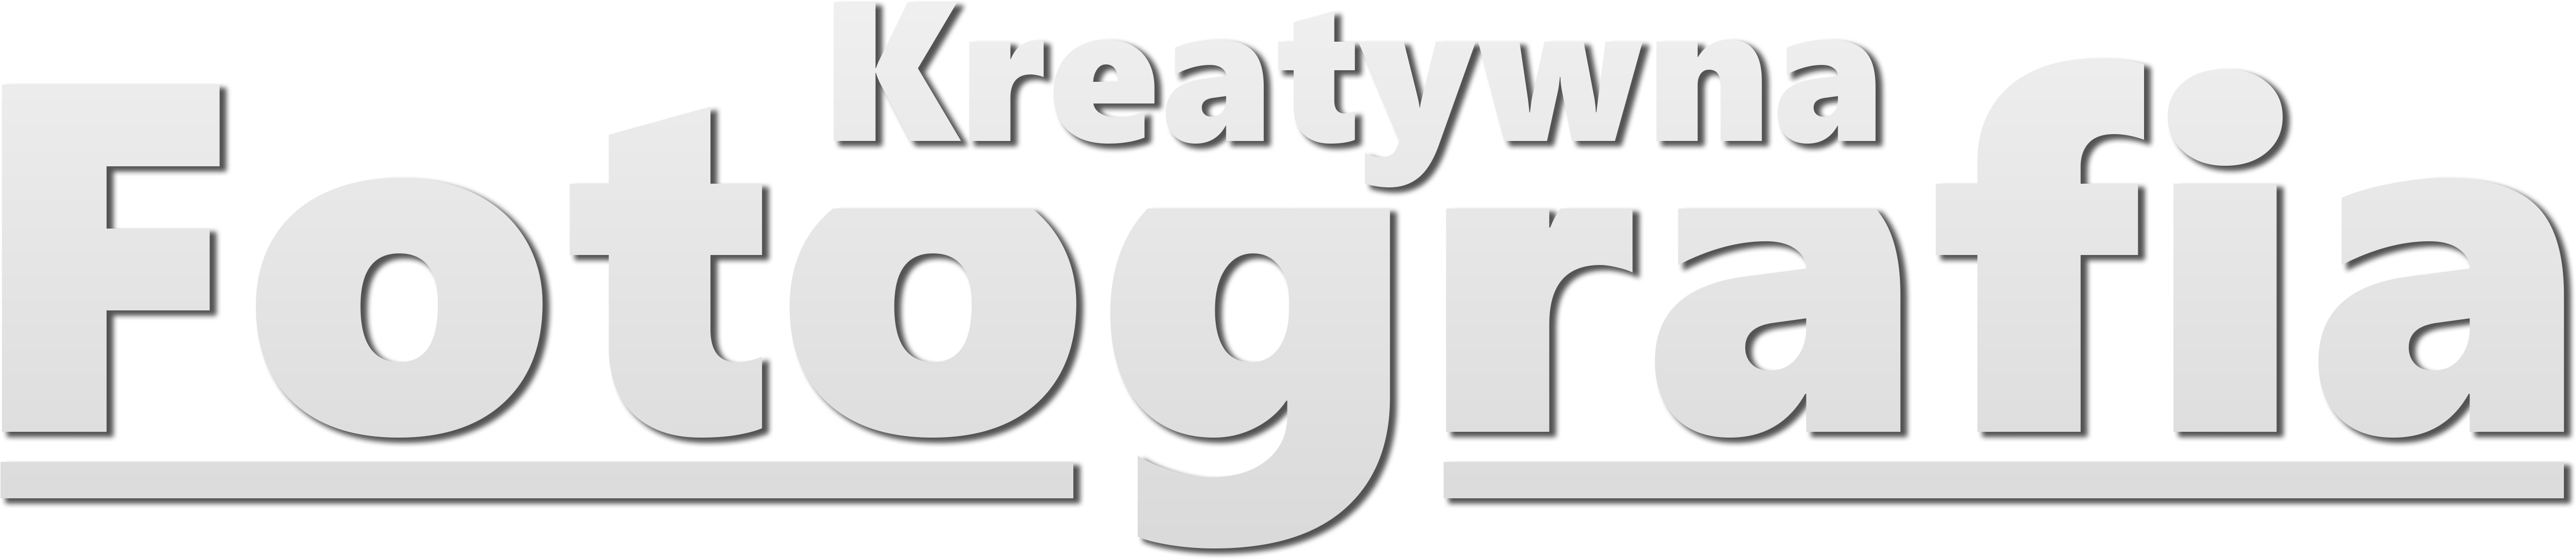 kreatywna fotografia logo